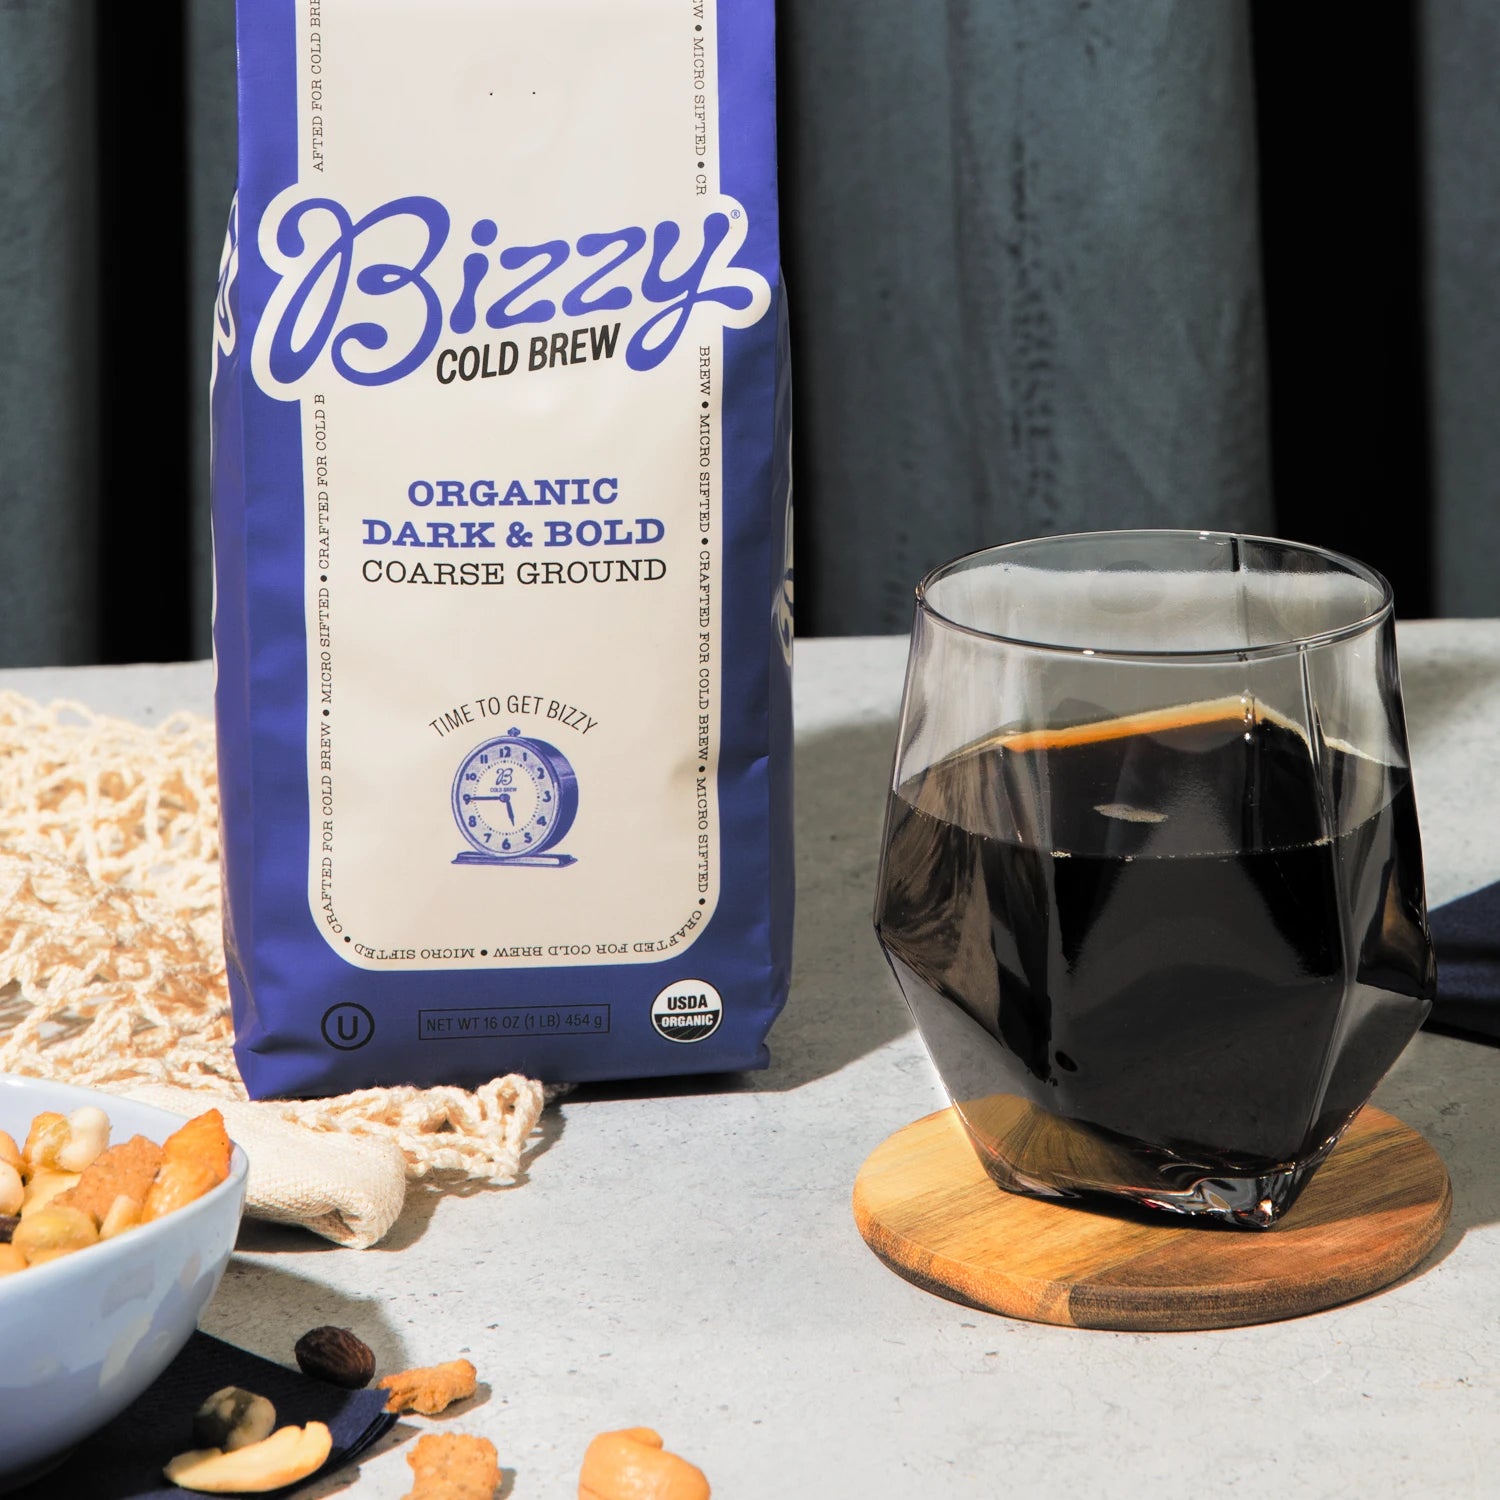 Bizzy Cold Brew Coffee, Decaf Blend, Coarse Ground Coffee, Specialty  Grade, 100% Arabica